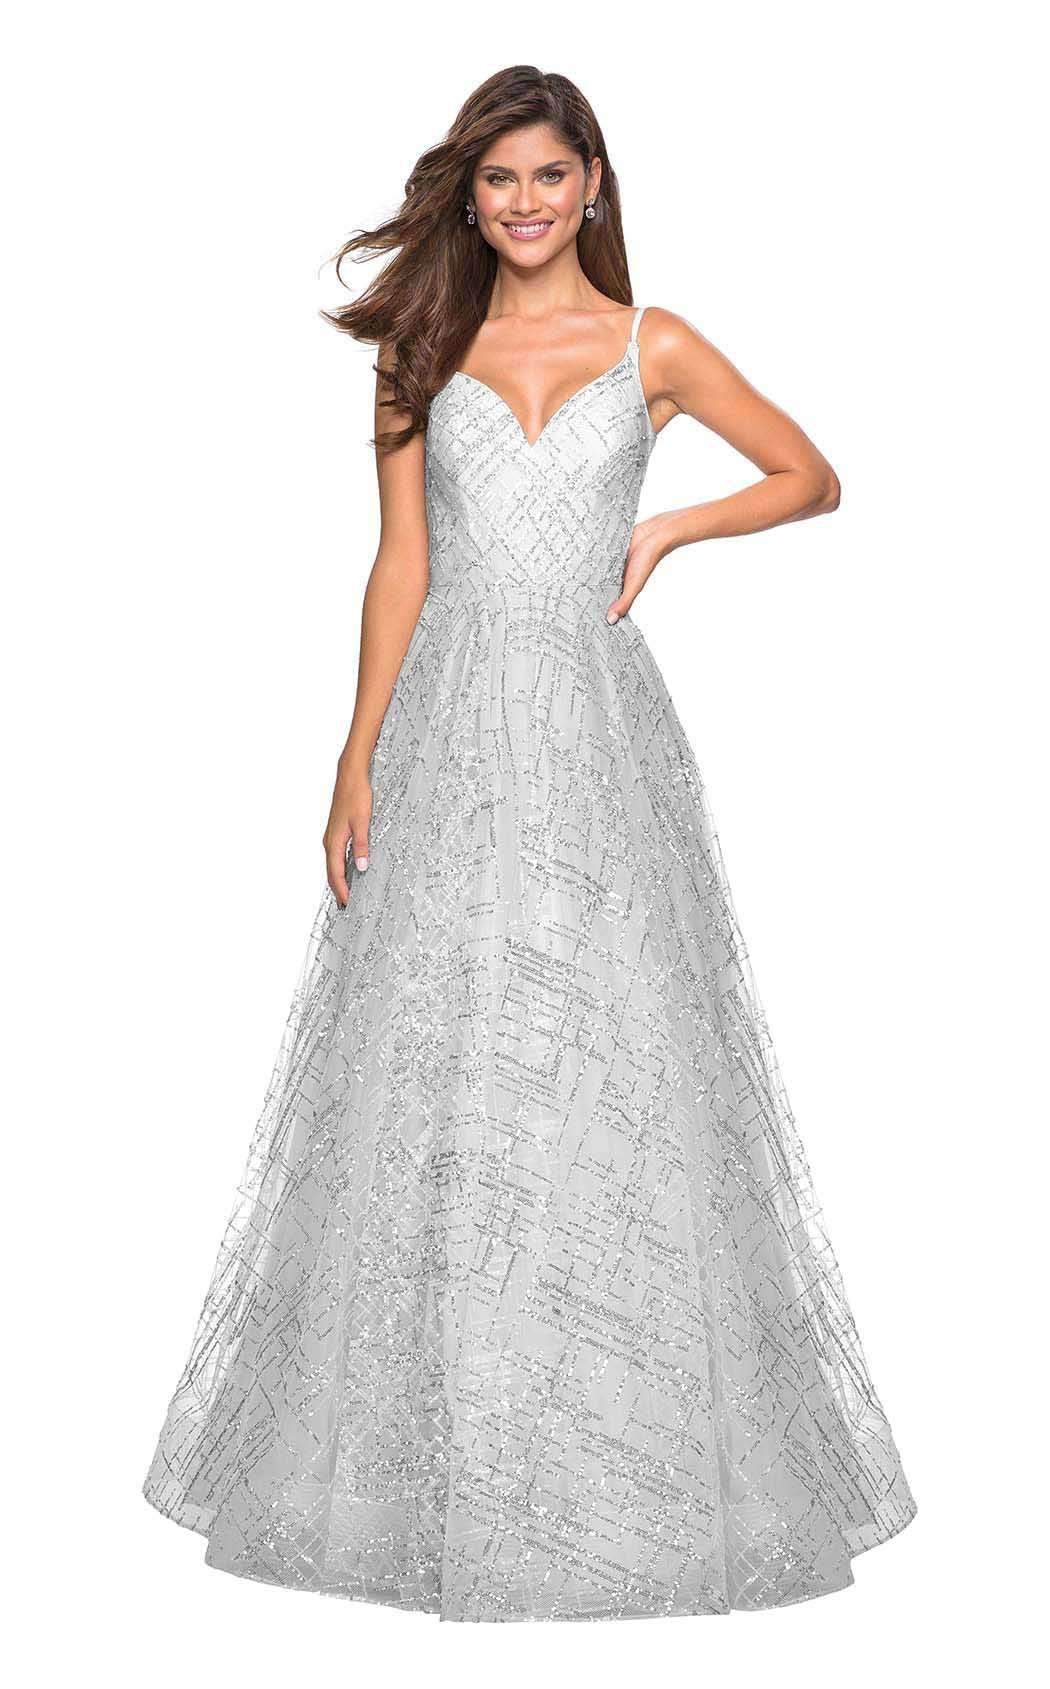 Image of La Femme - 27199 Sparkling Sequin Sleeveless A-Line Dress